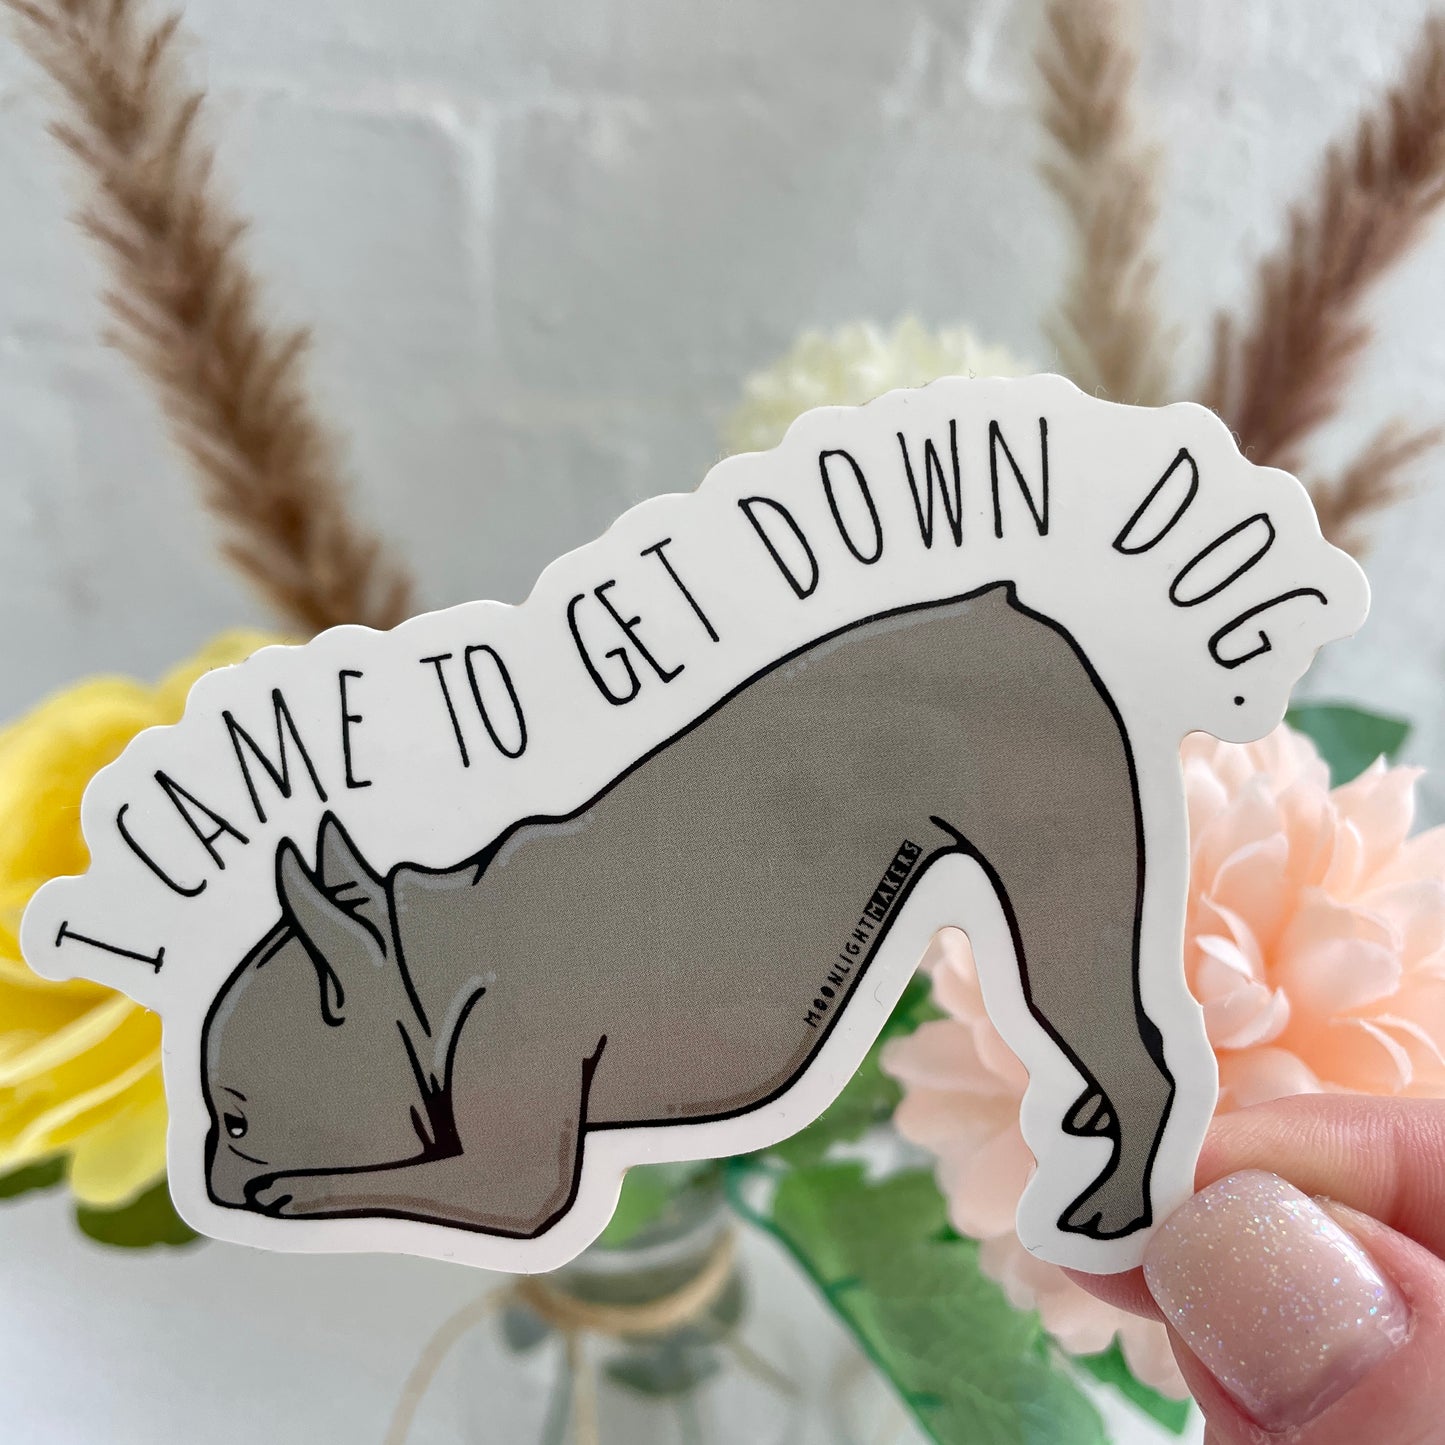 I Came To Get Down Dog - Die Cut Sticker